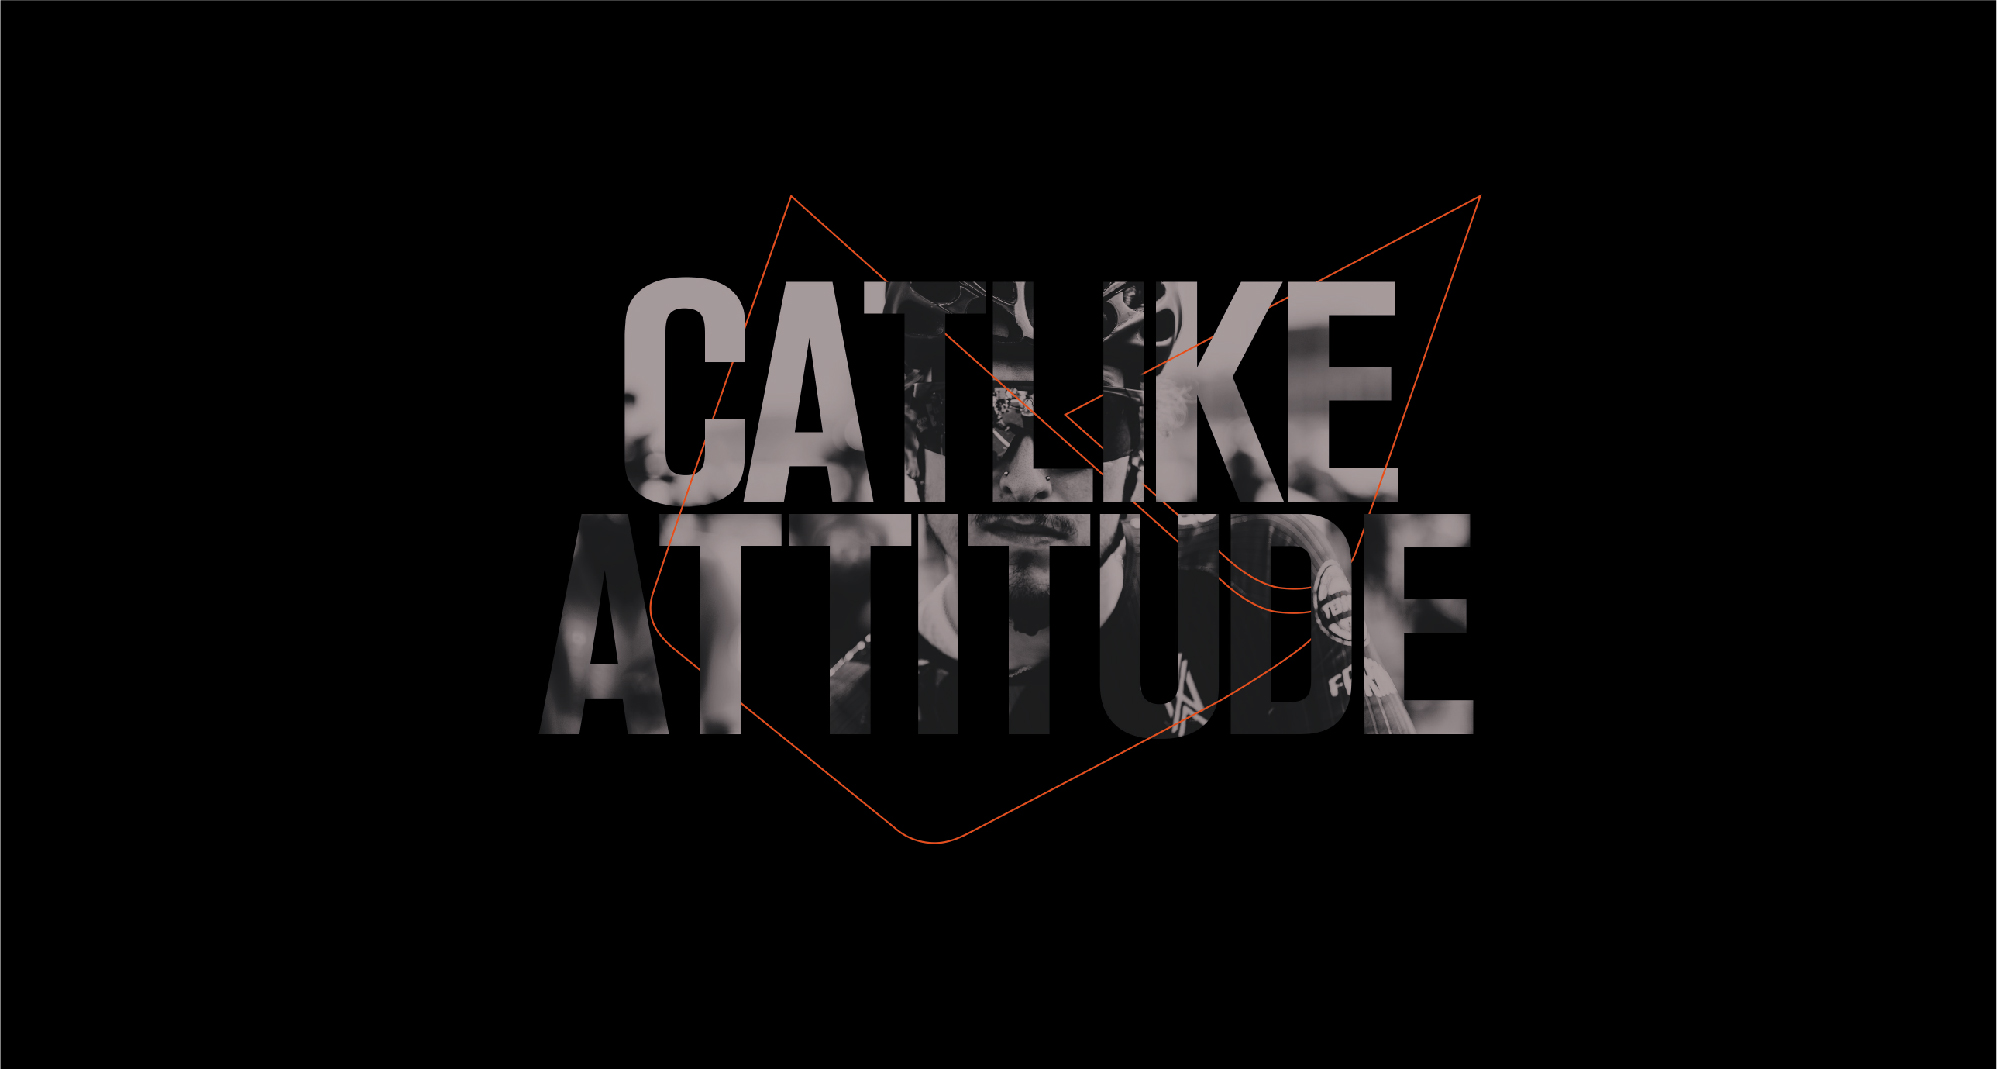 Catlike